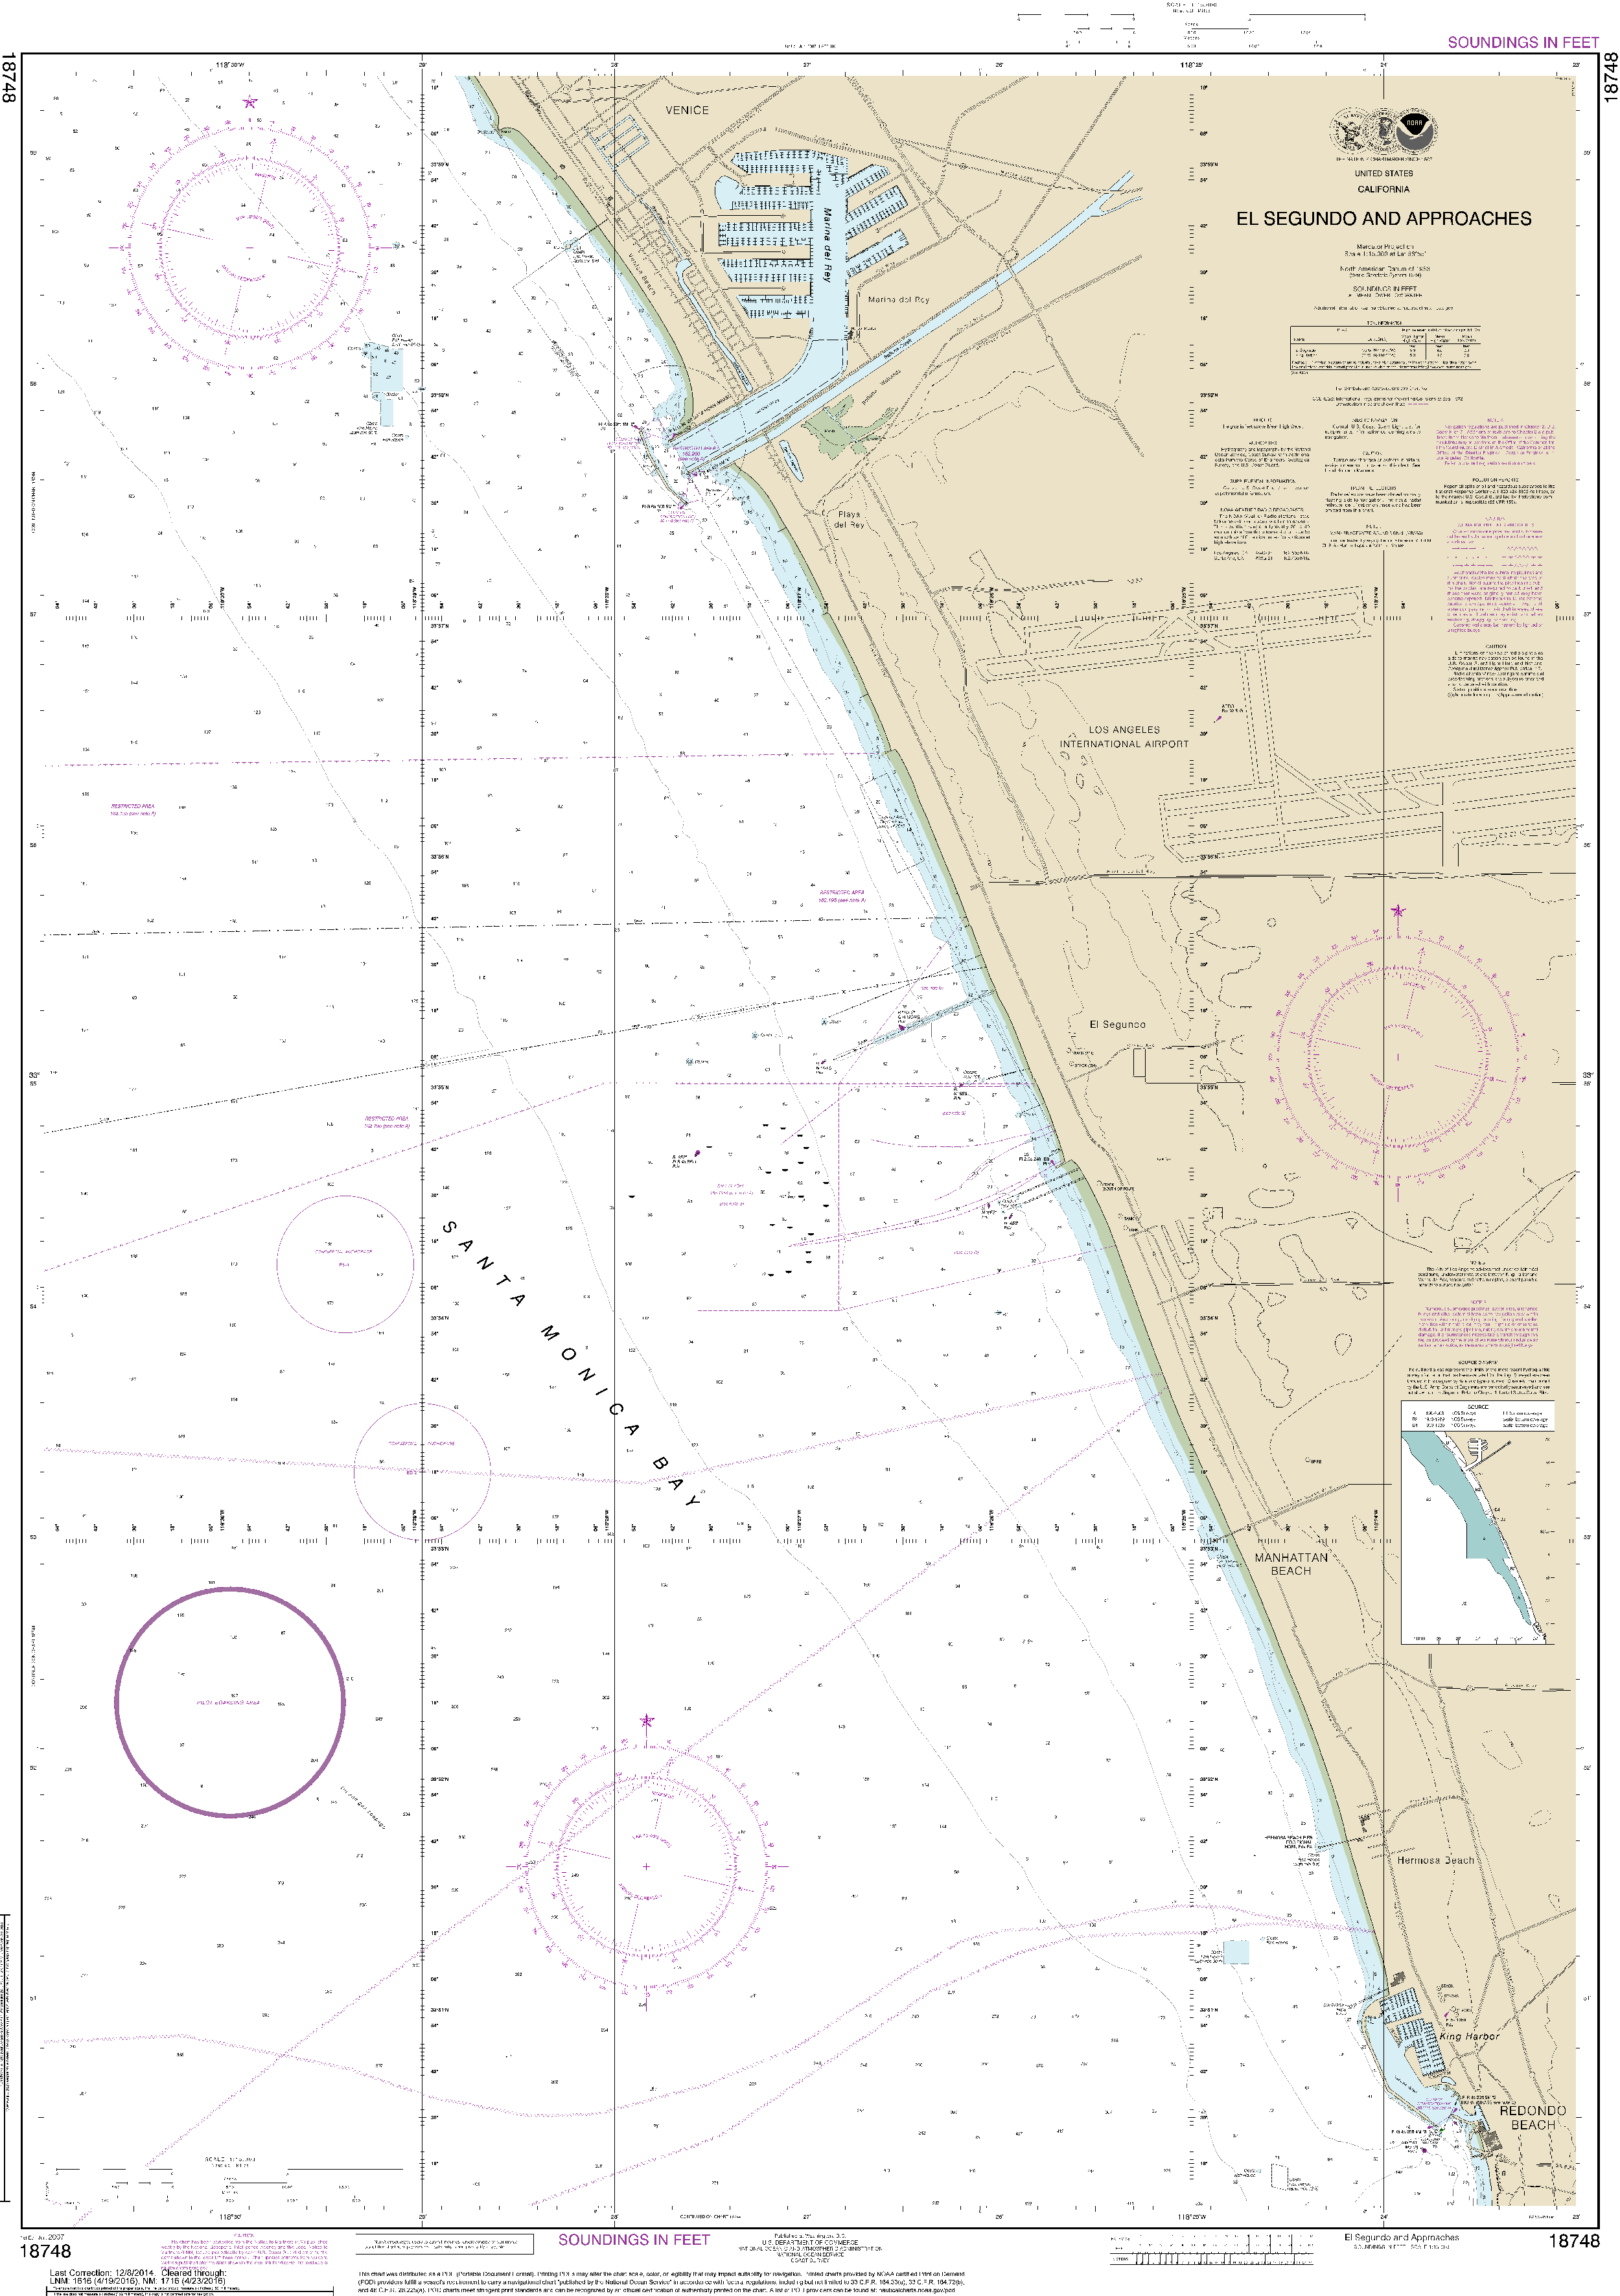 NOAA Nautical Chart 18748: El Segundo and Approaches